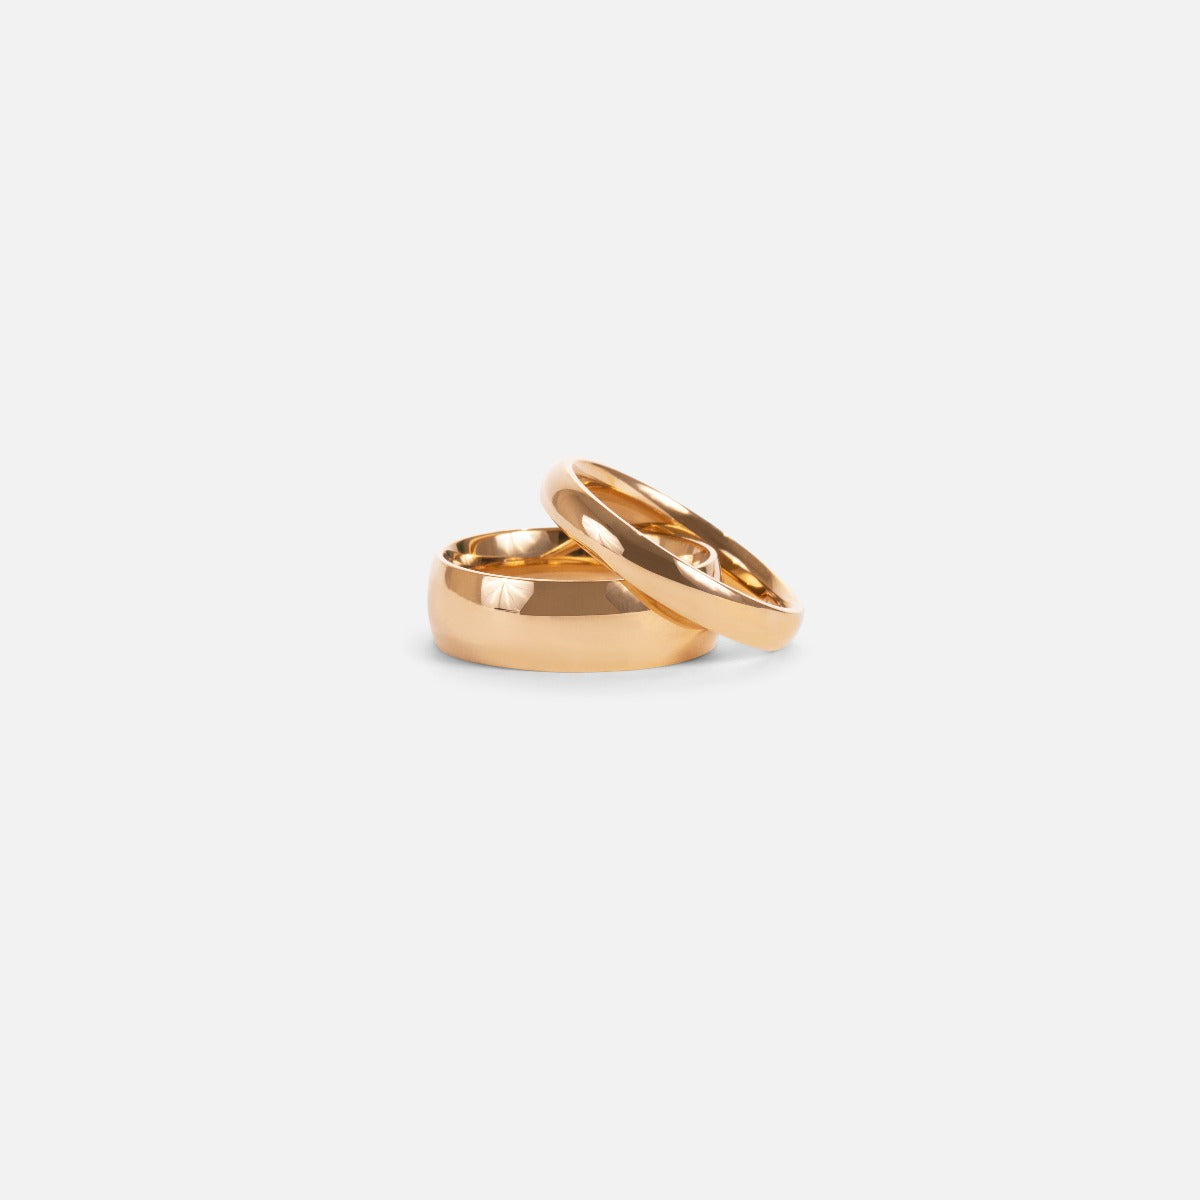 Set of two plain golden stainless steel rings